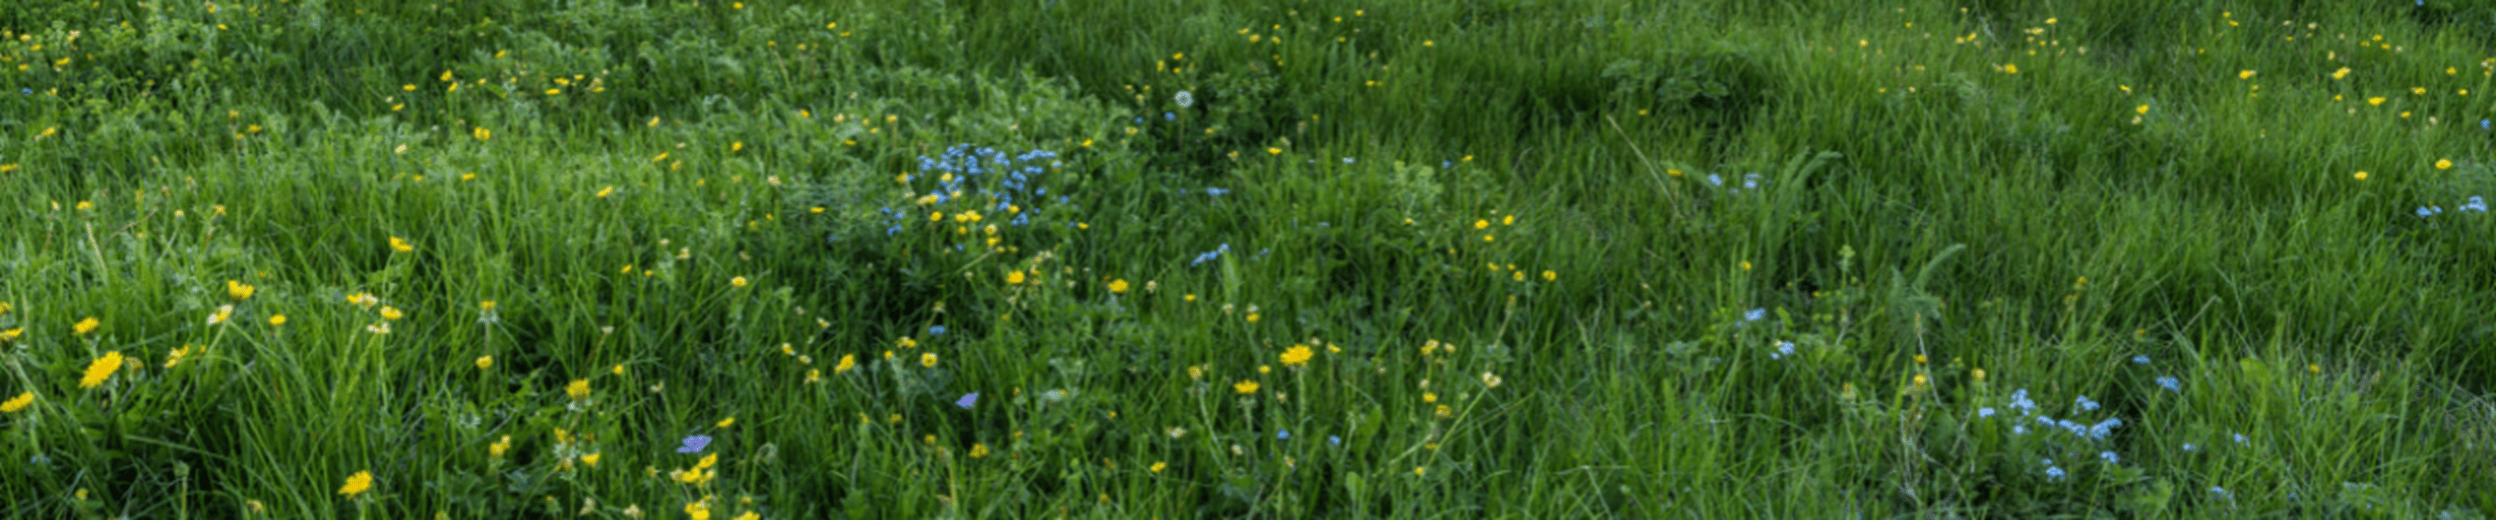 Spring flowers in green meadow